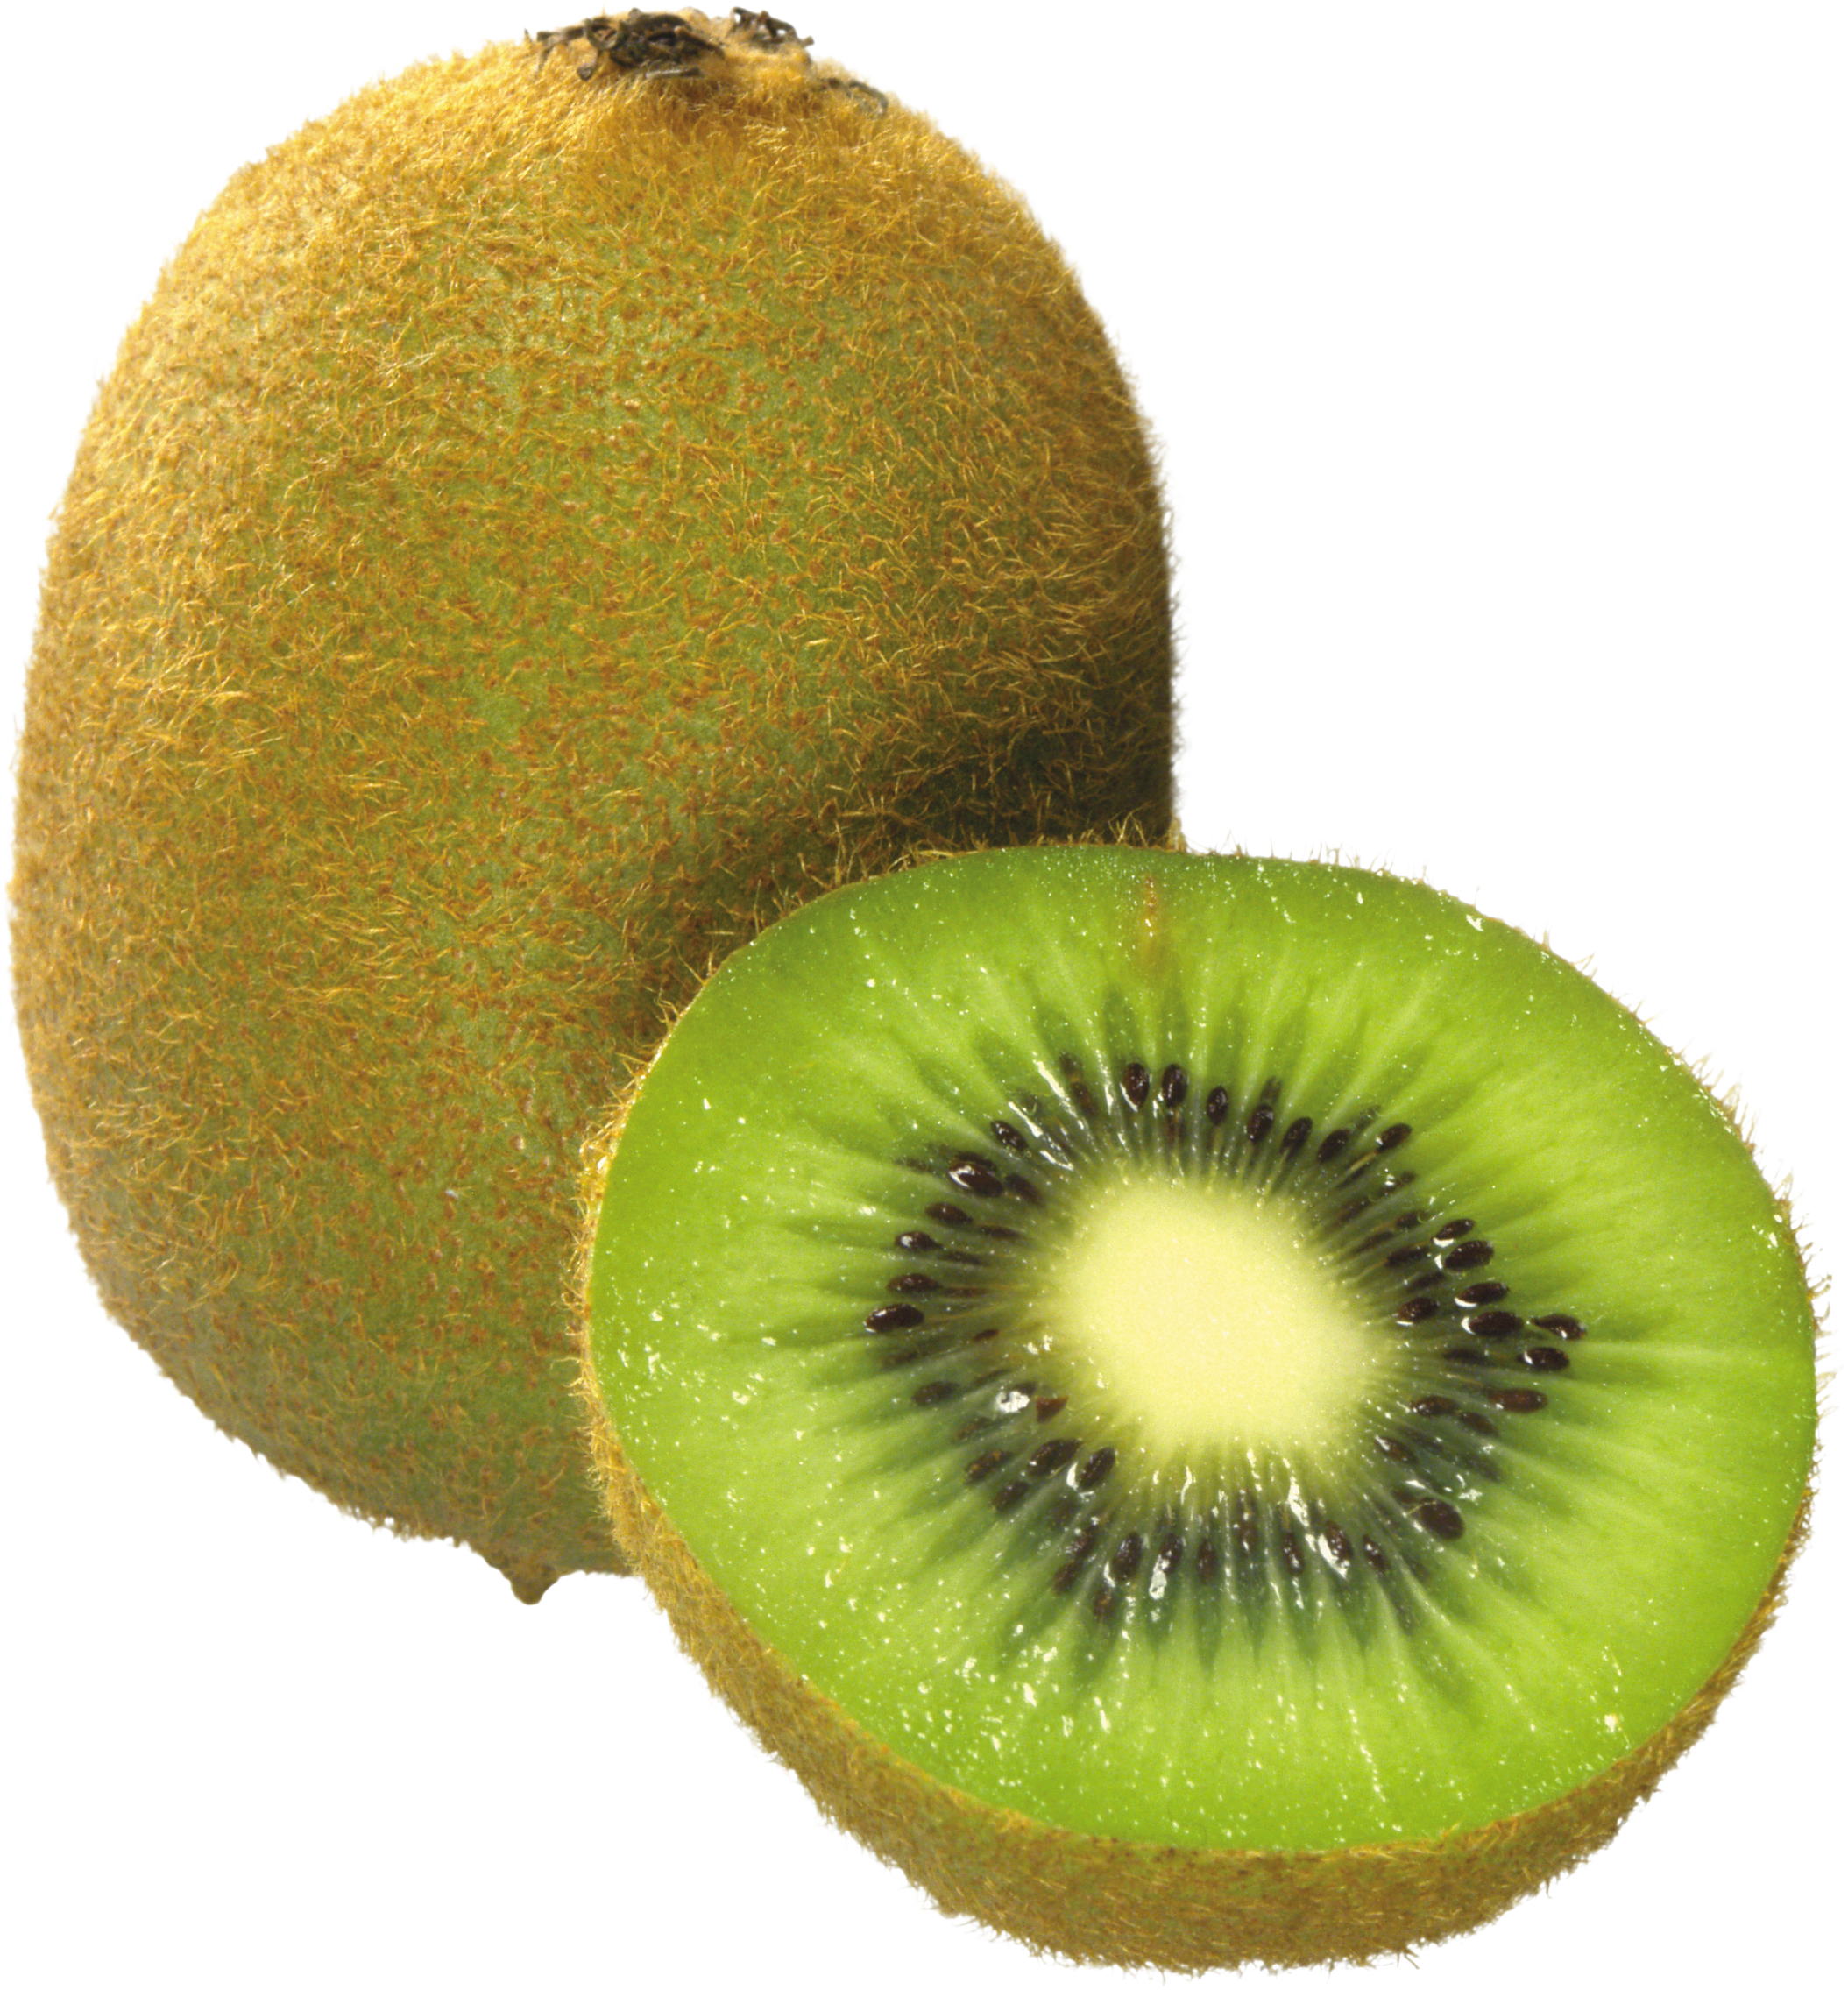 Kiwi Png Image Fruit Kiwi Png